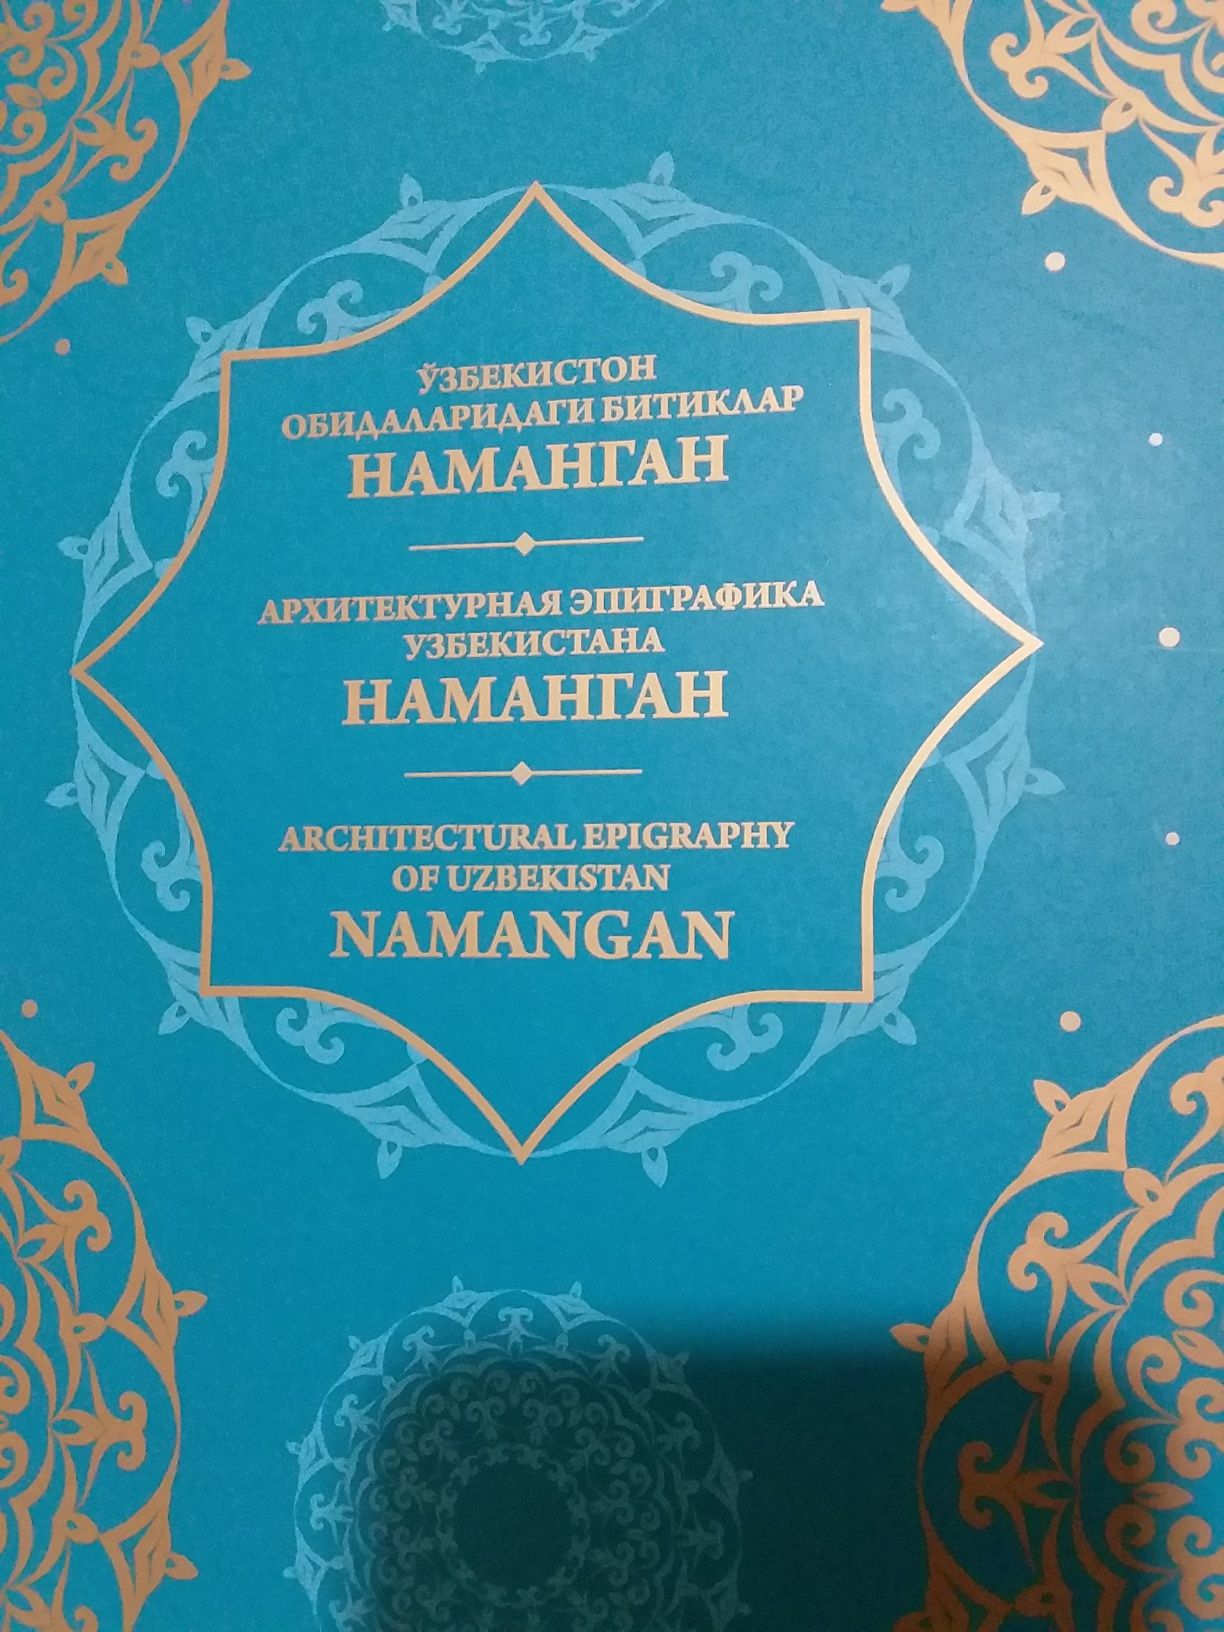 Книга -альбом " Наманган." Архитектурная эпиграфика